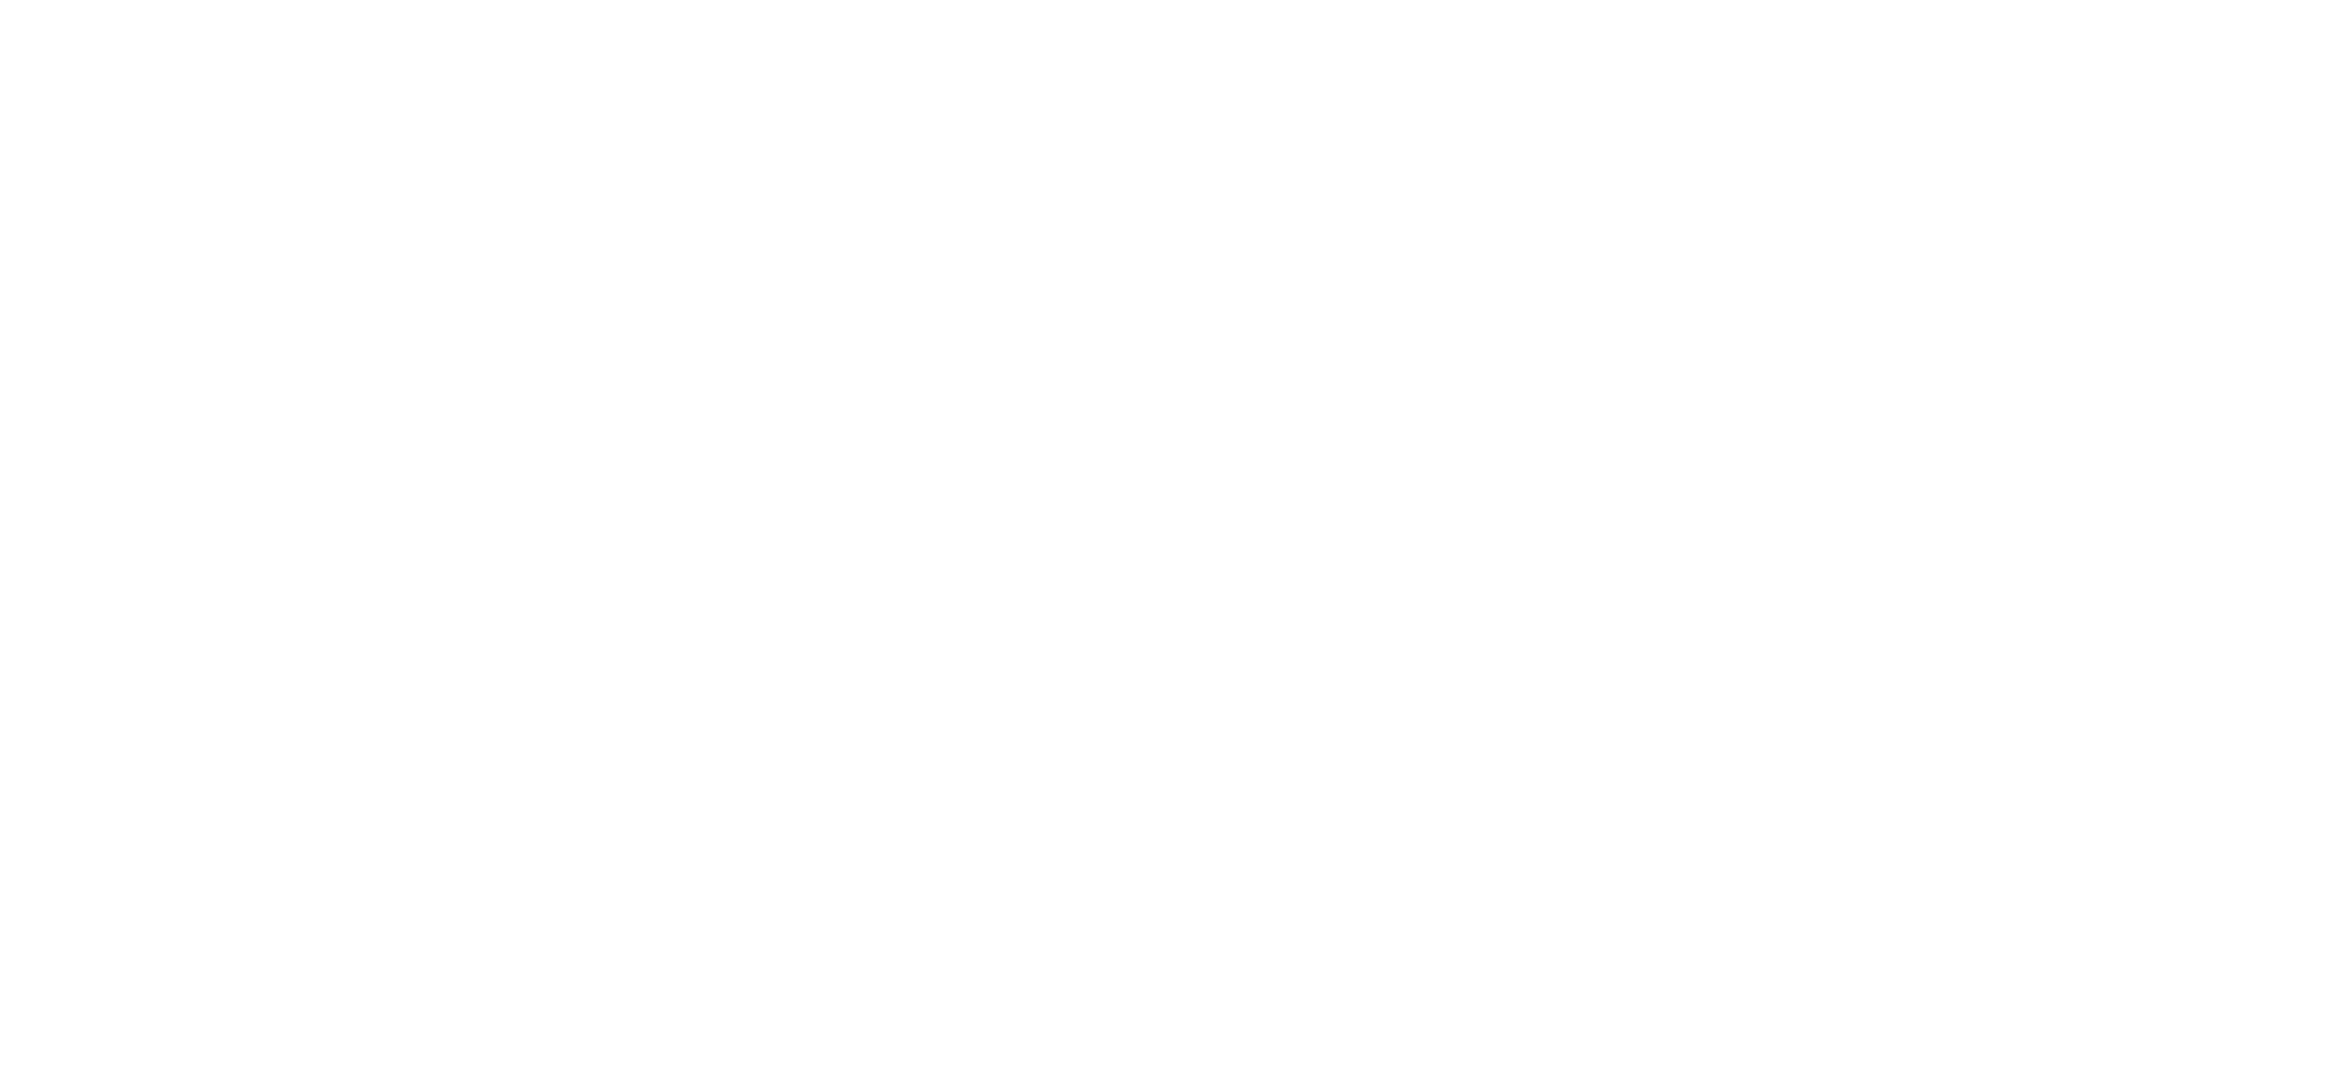 Aaron Carter: The Little Prince of Pop logo